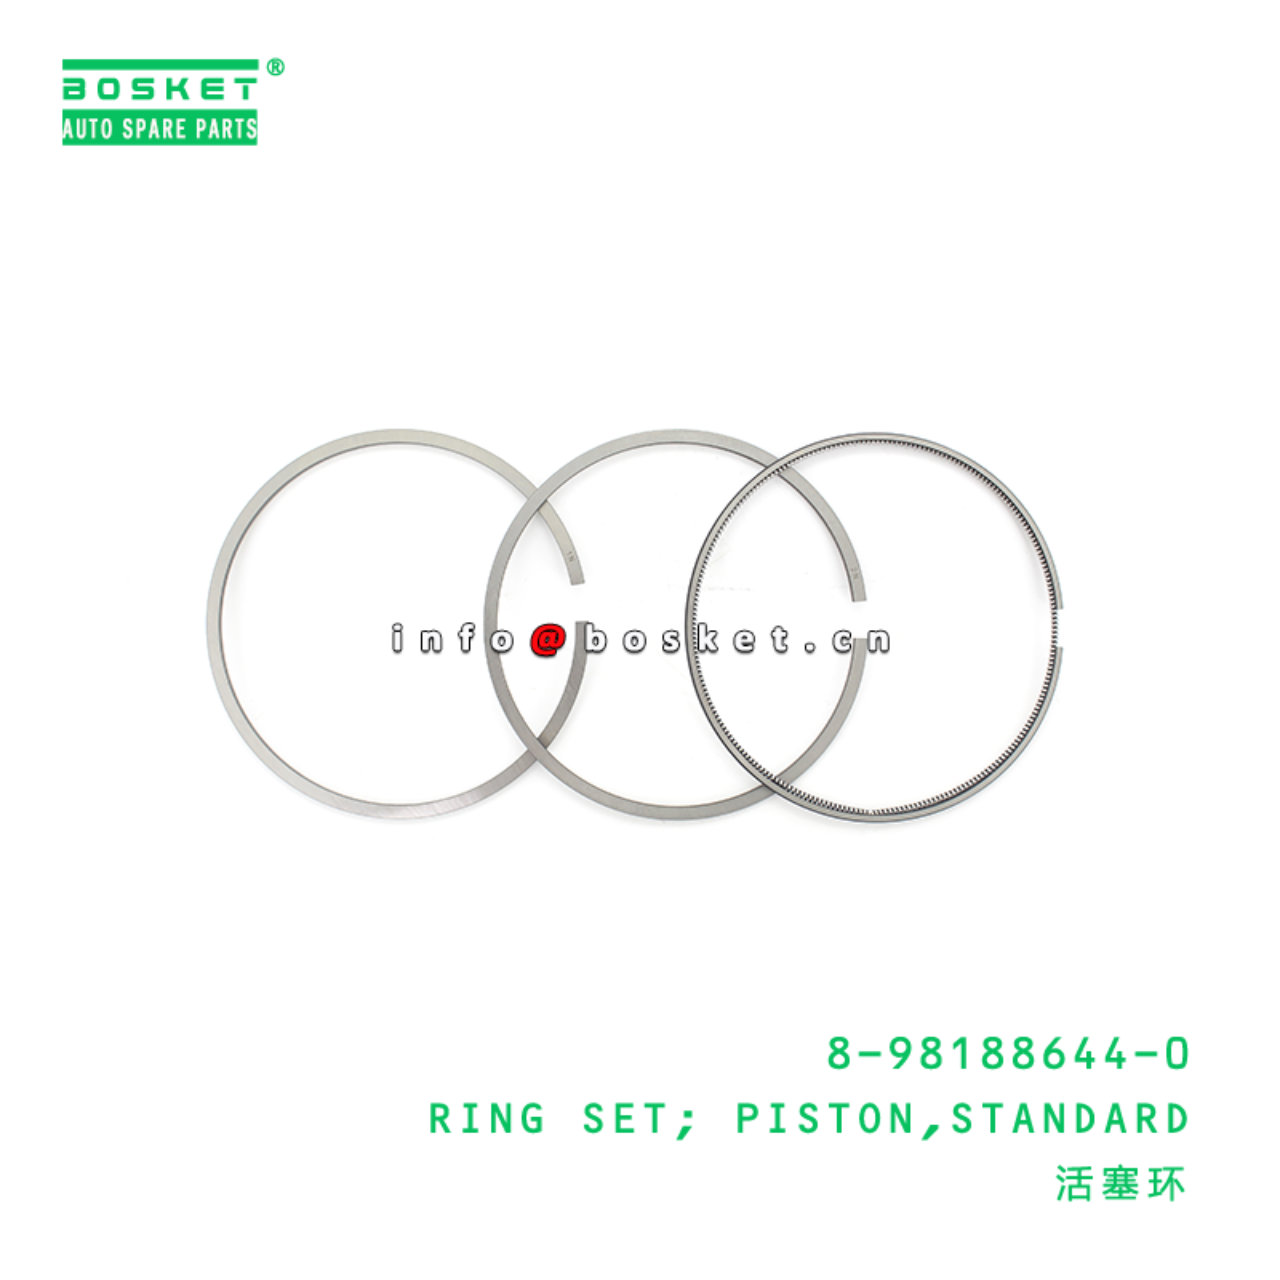 8-98188644-0 Standard Piston Ring Set Suitable for ISUZU NKR 4JH1 8981886440